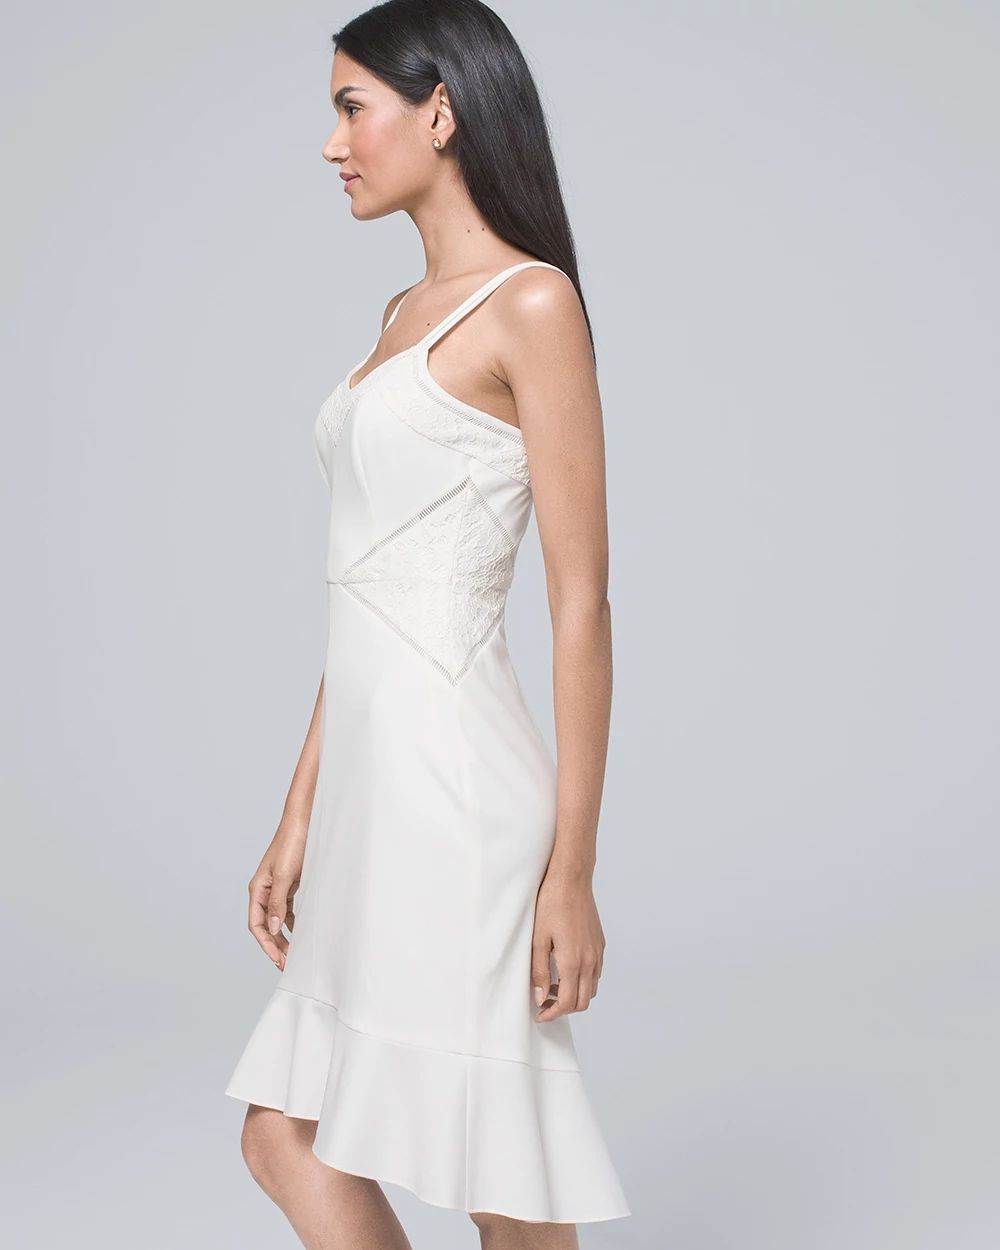 Flutter-Hem White Dress click to view larger image.